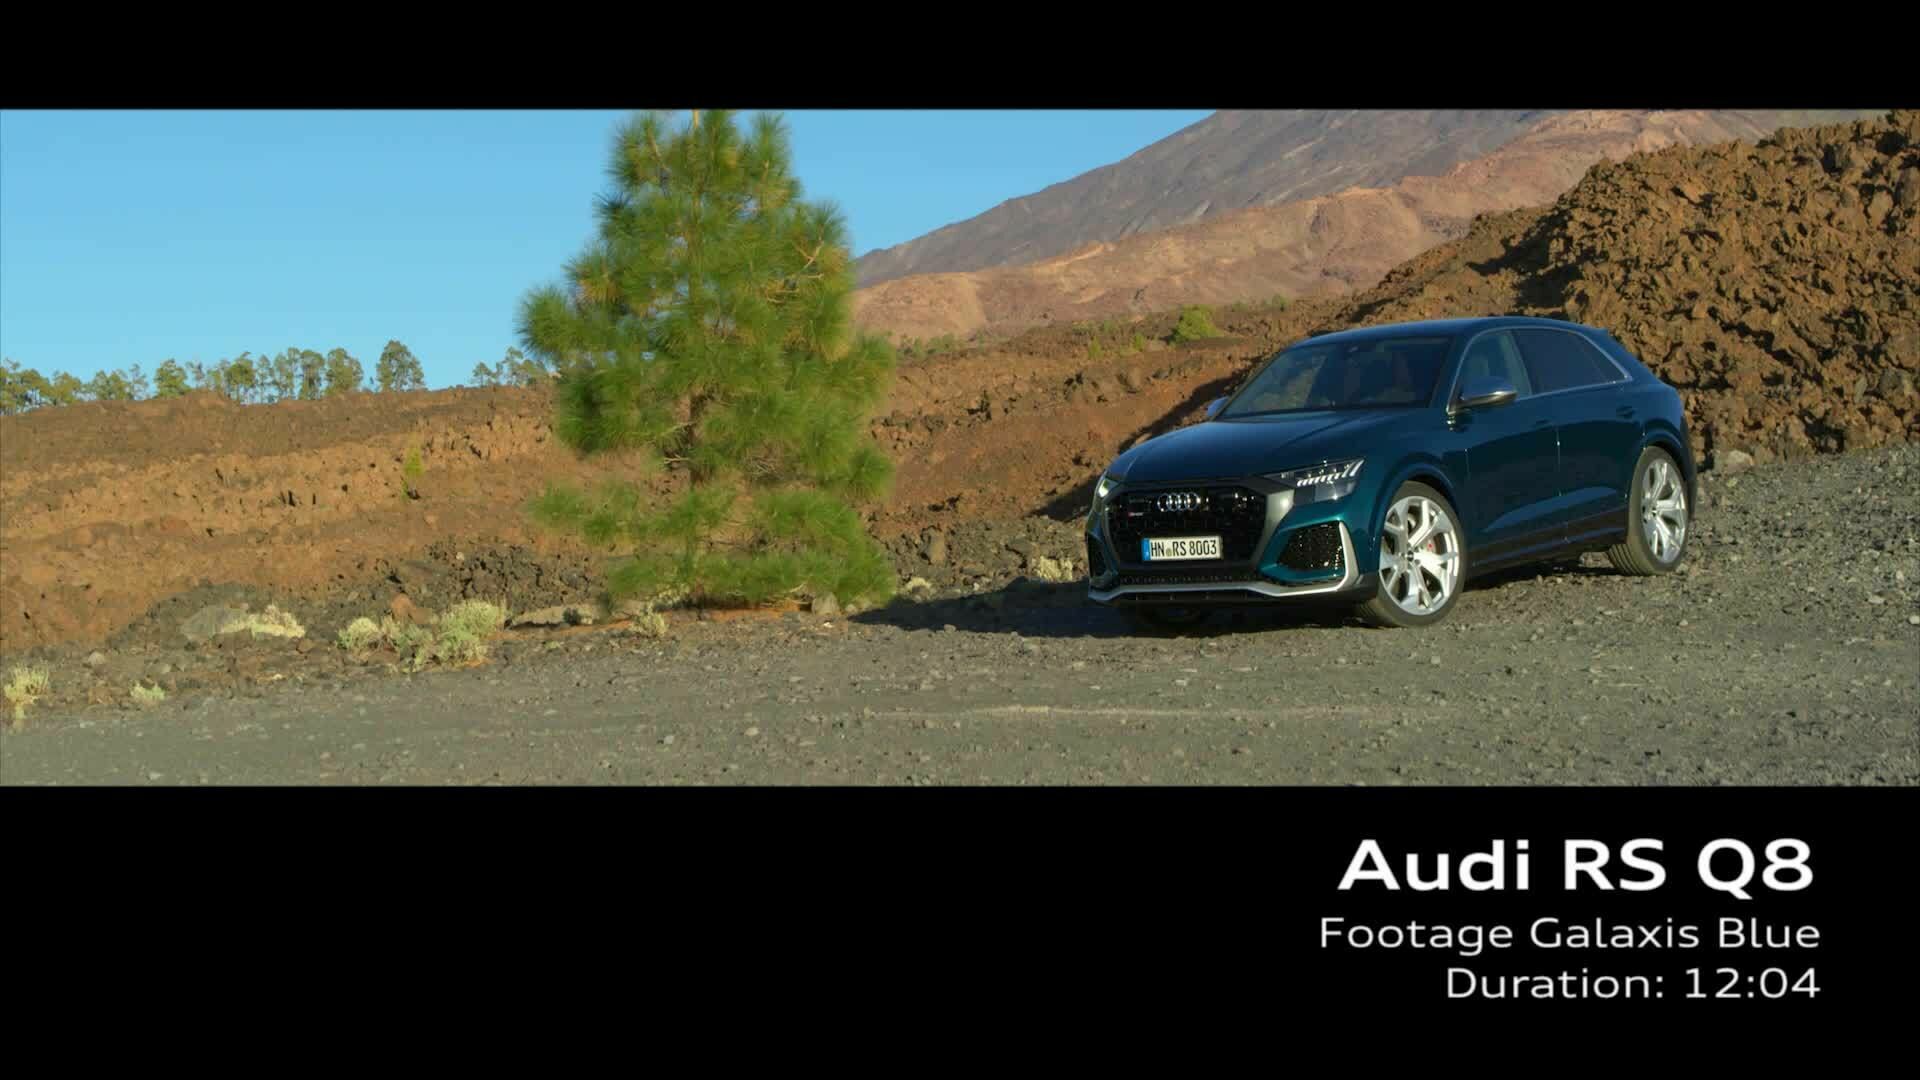 Audi RS Q8 on Location Galaxisblau (Footage)